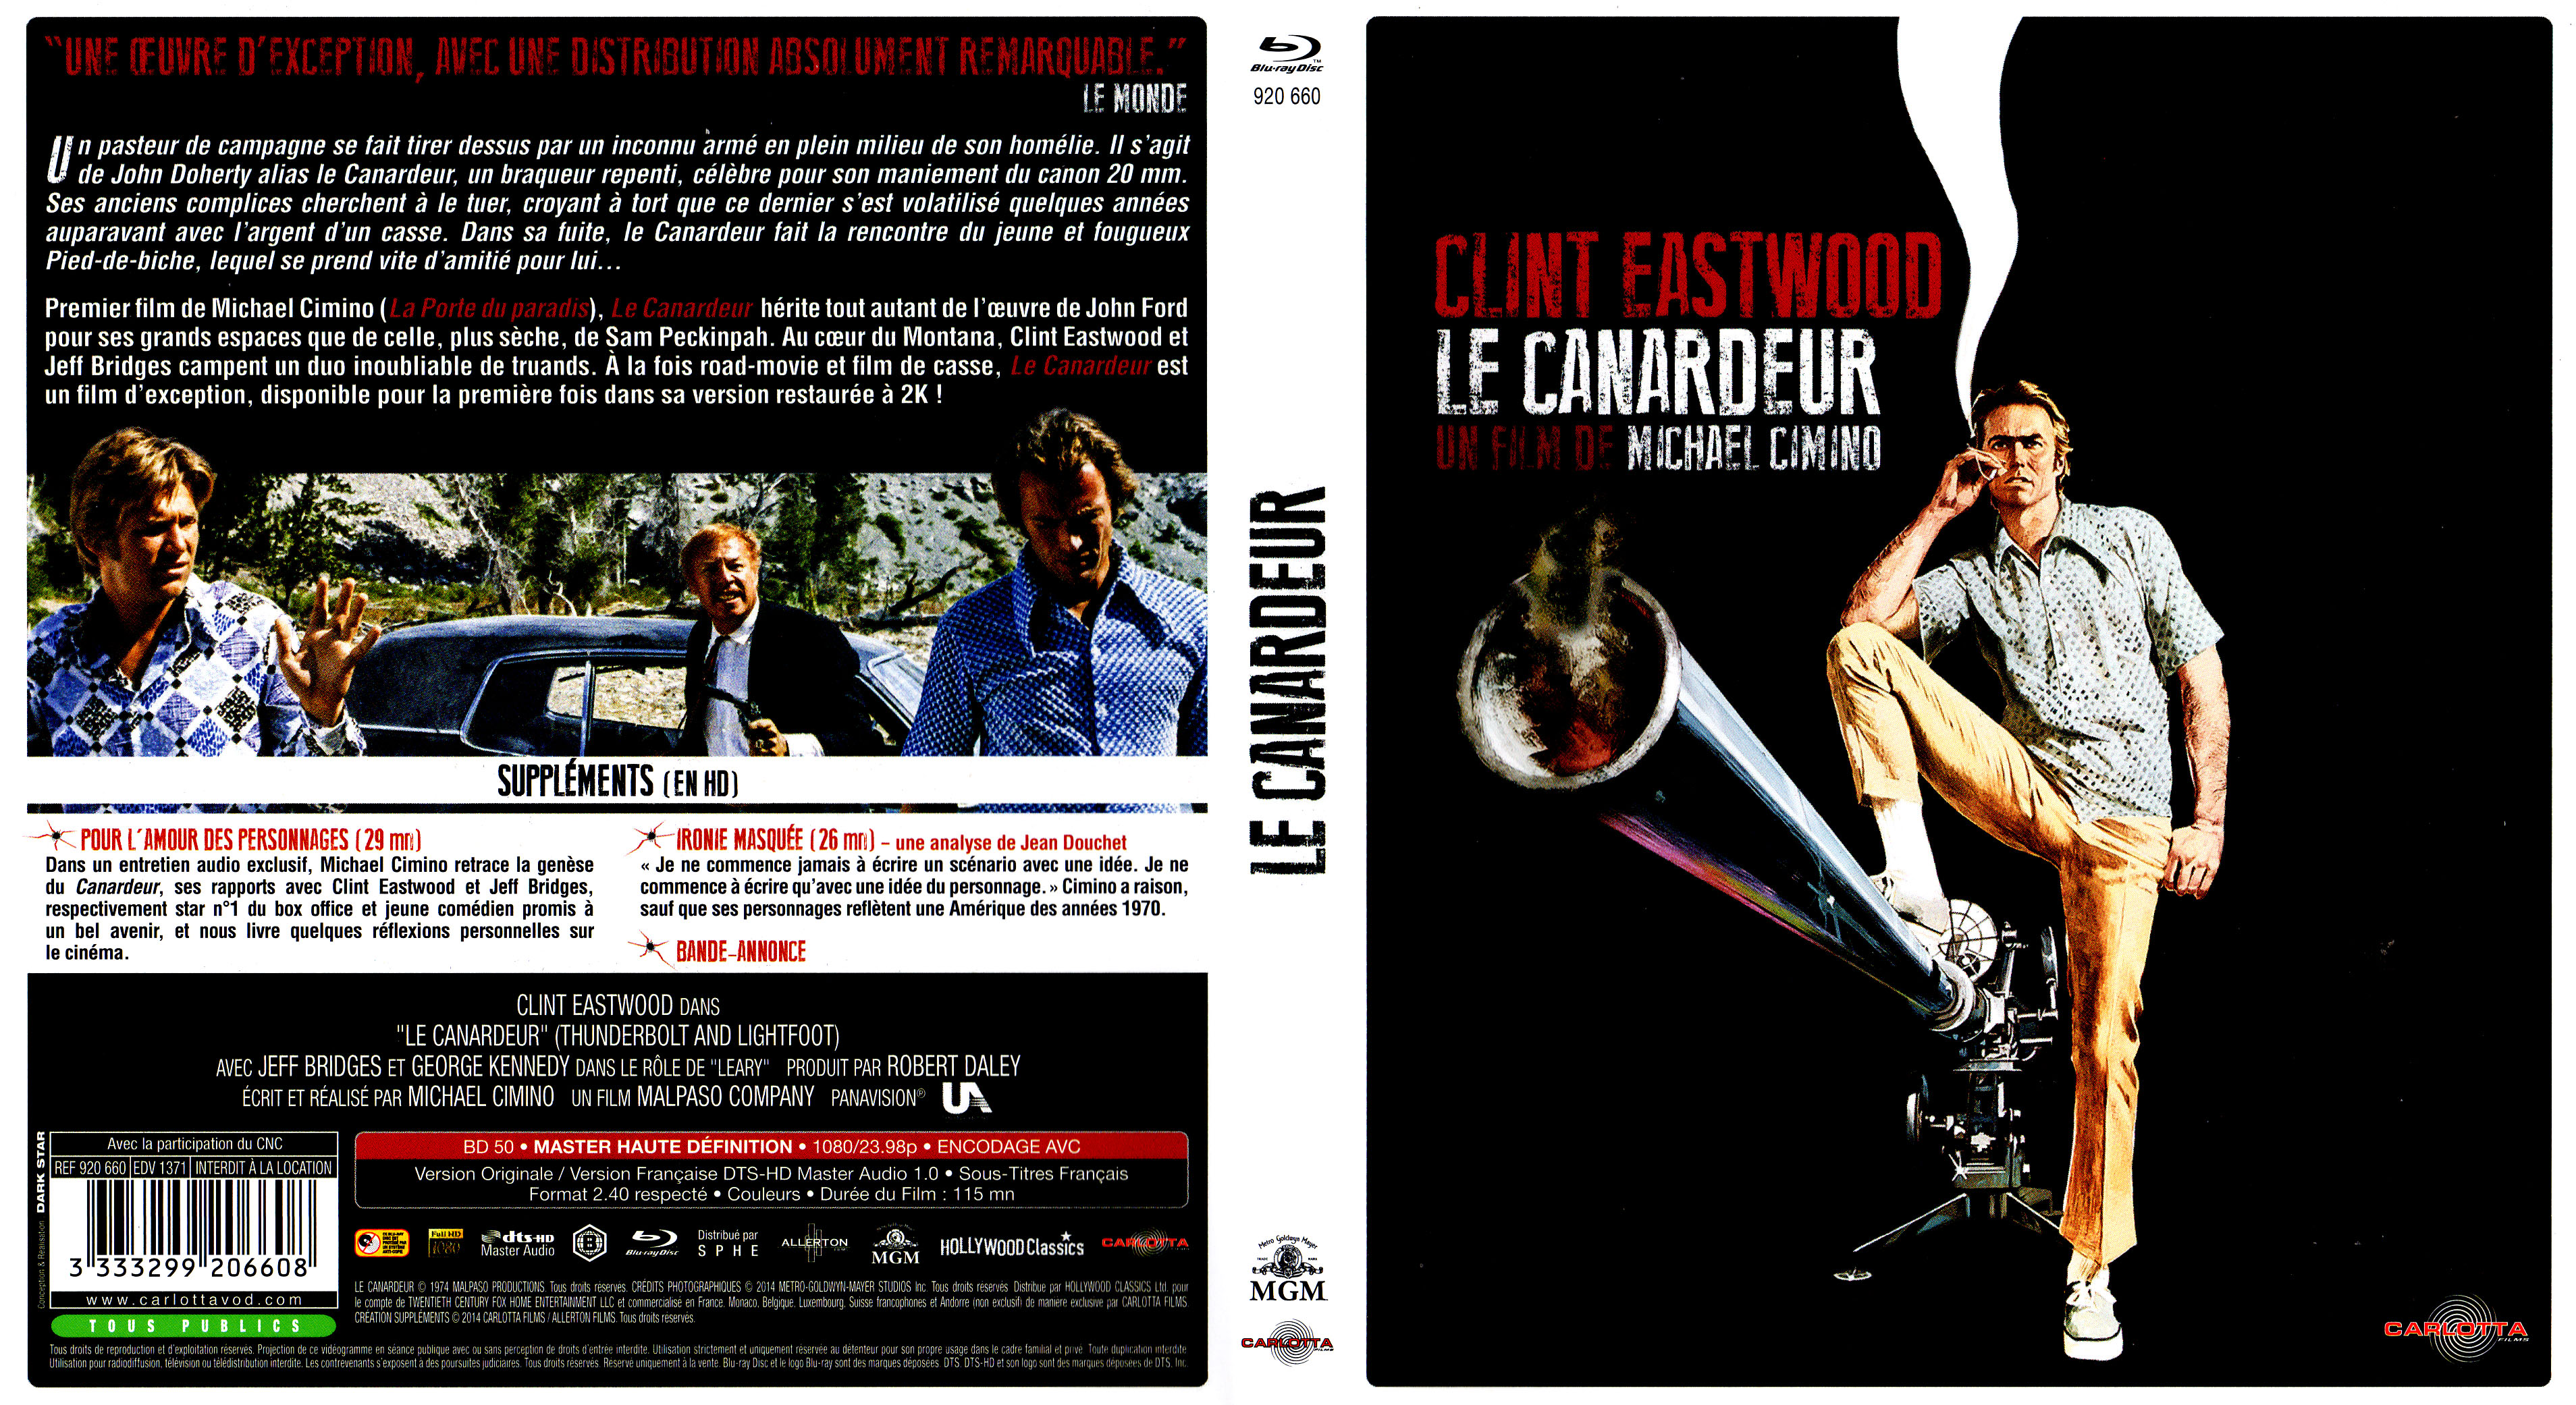 Jaquette DVD Le canardeur (BLU-RAY)